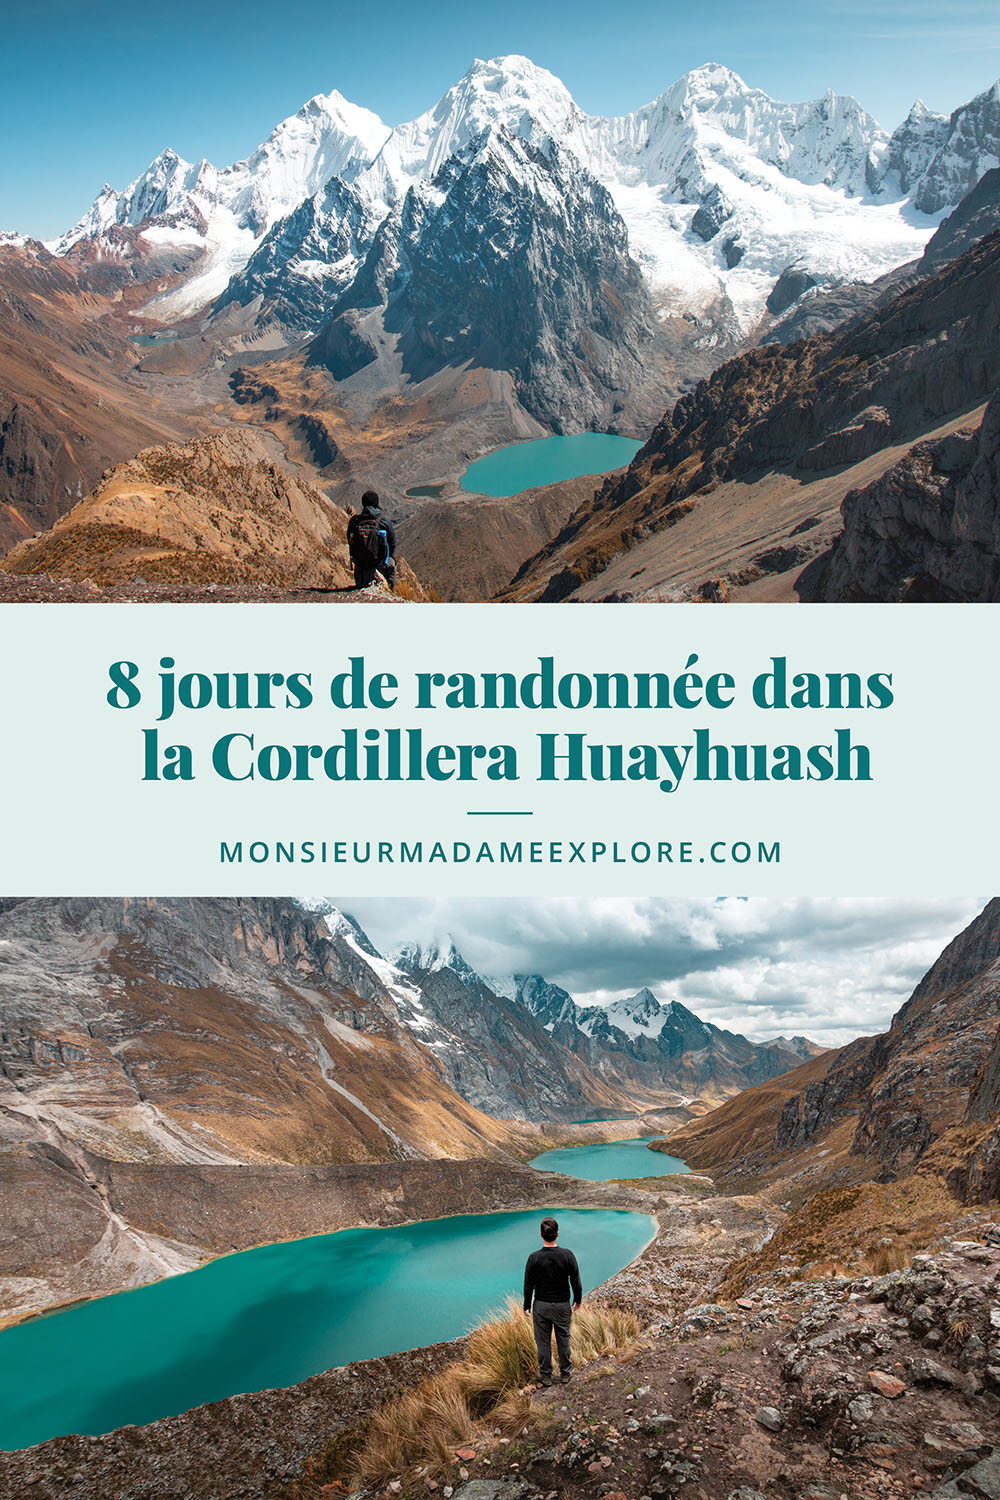 8 jours de randonnée dans la Cordillera Huayhuash, Monsieur+Madame Explore, Blogue de voyage, Pérou / Hiking in the Cordillera Huayhuash, Peru